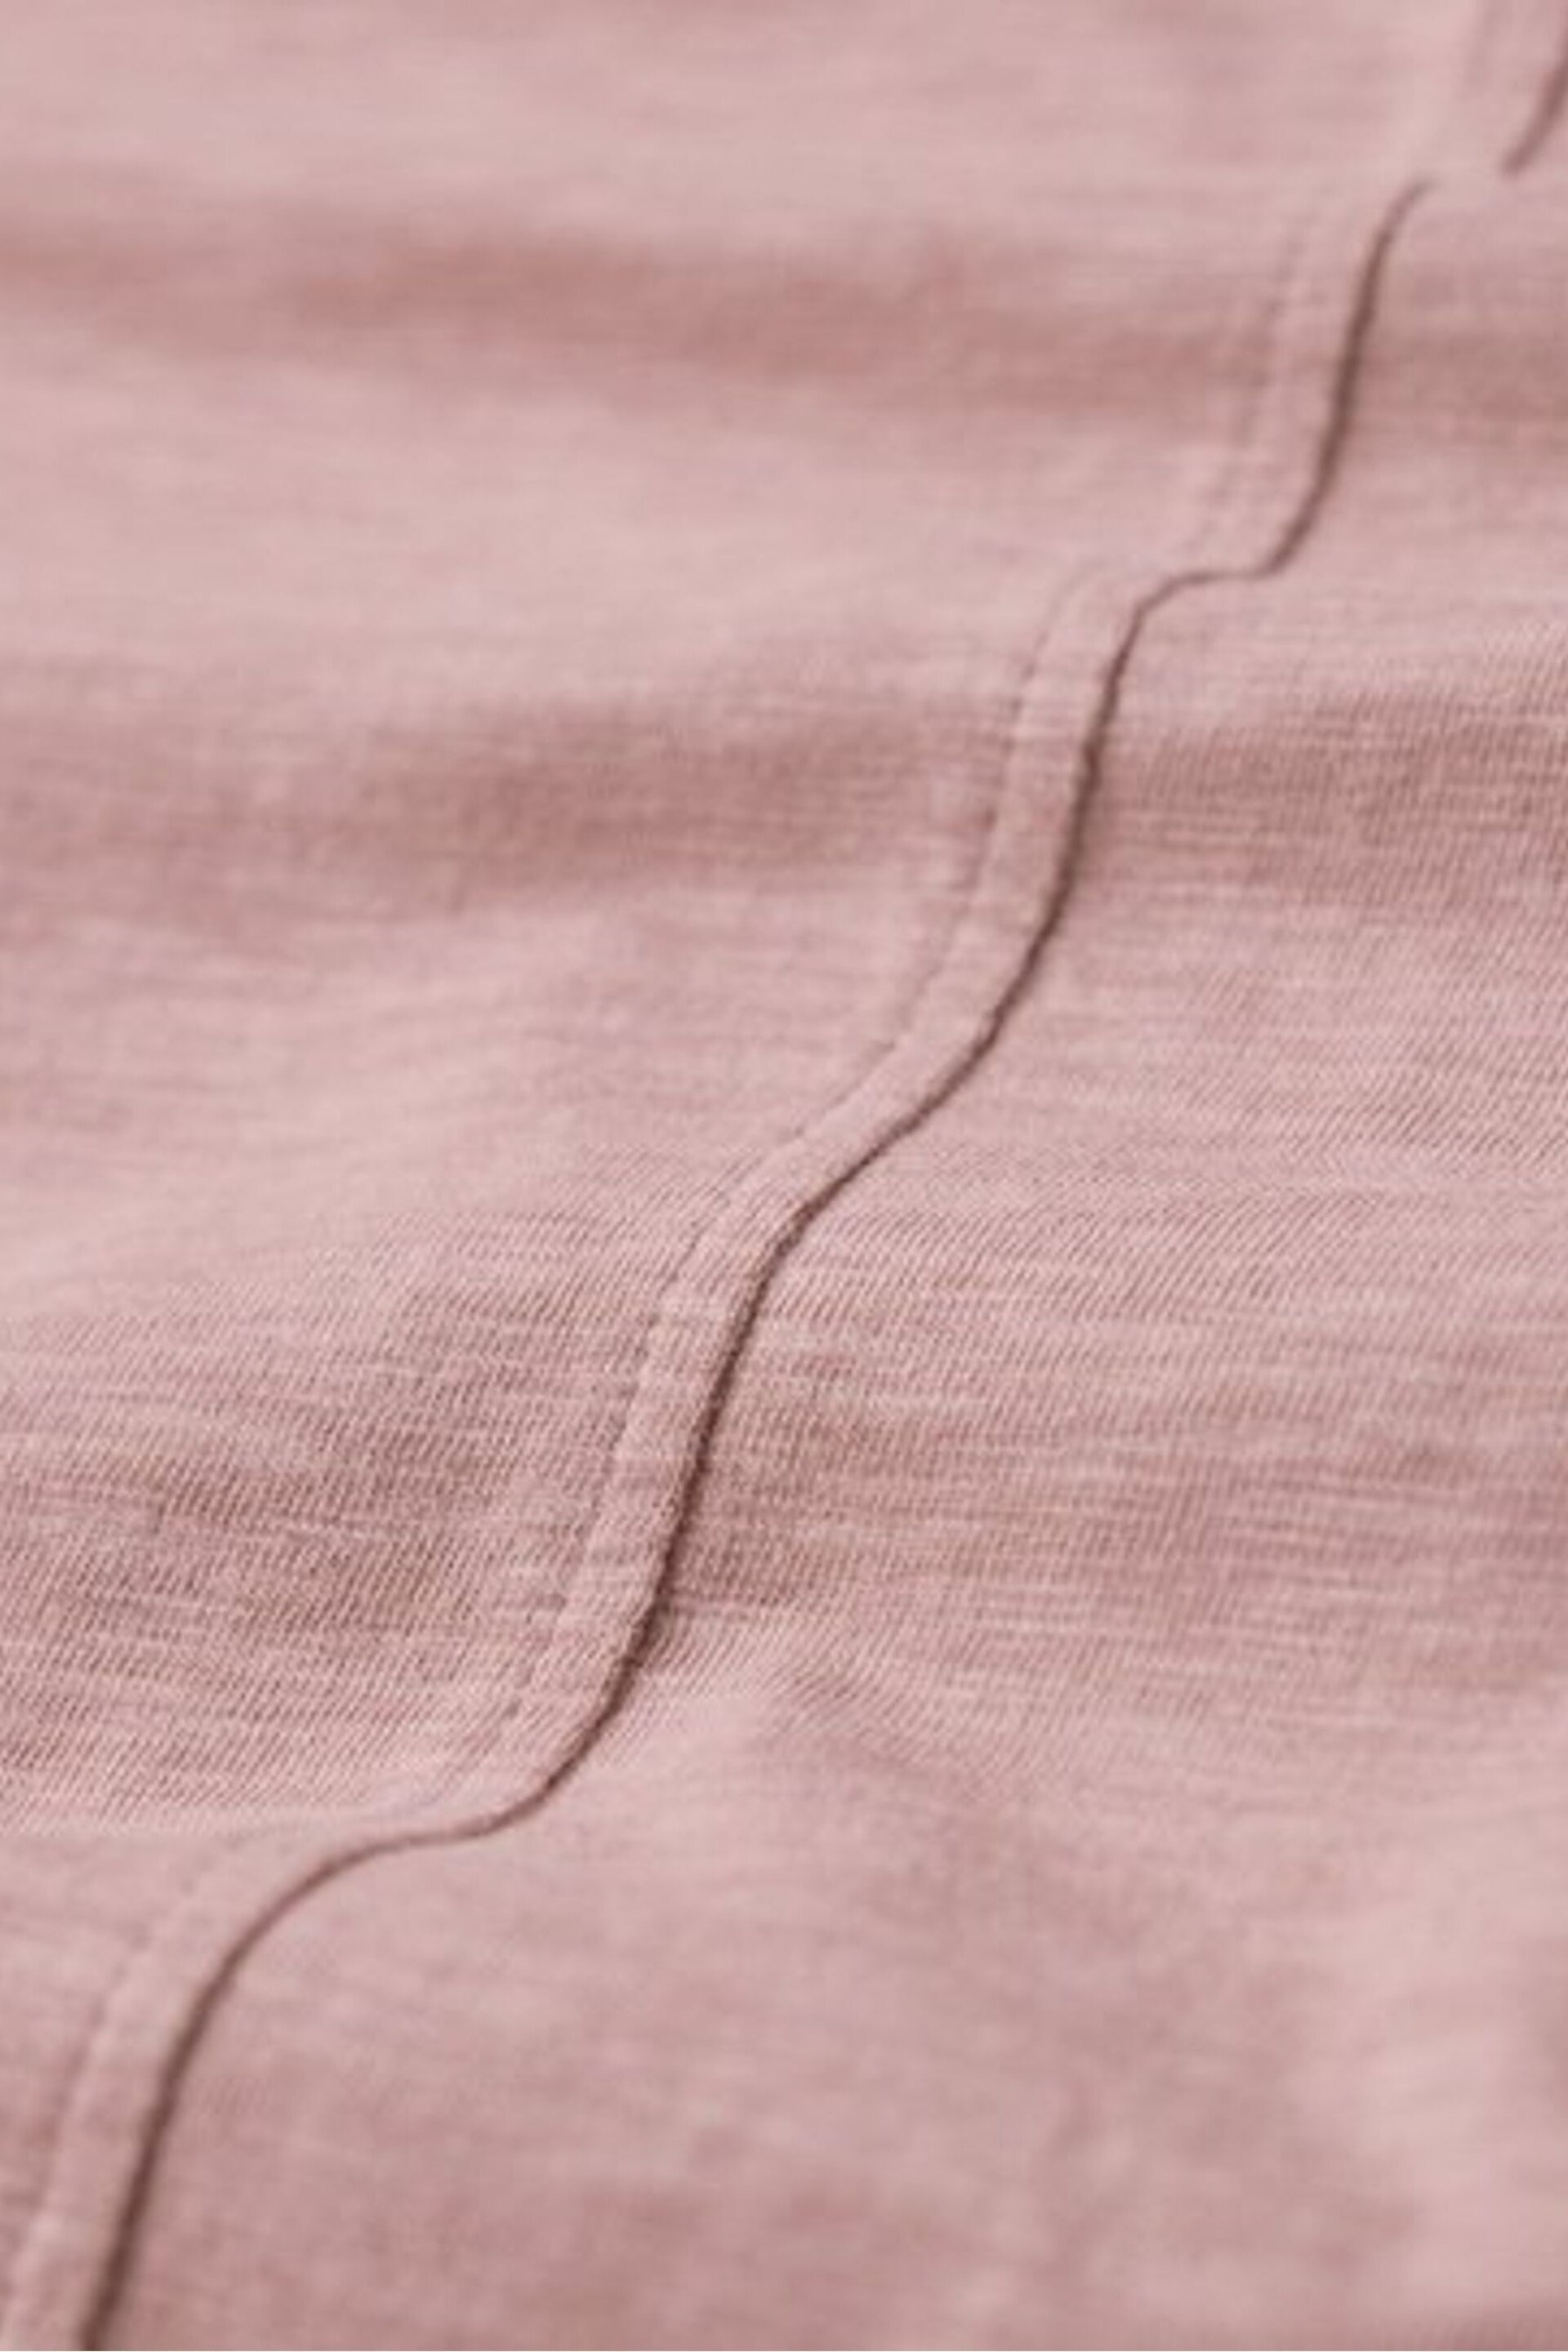 Superdry Pink Long Sleeve Jersey V-Neck Top - Image 6 of 6